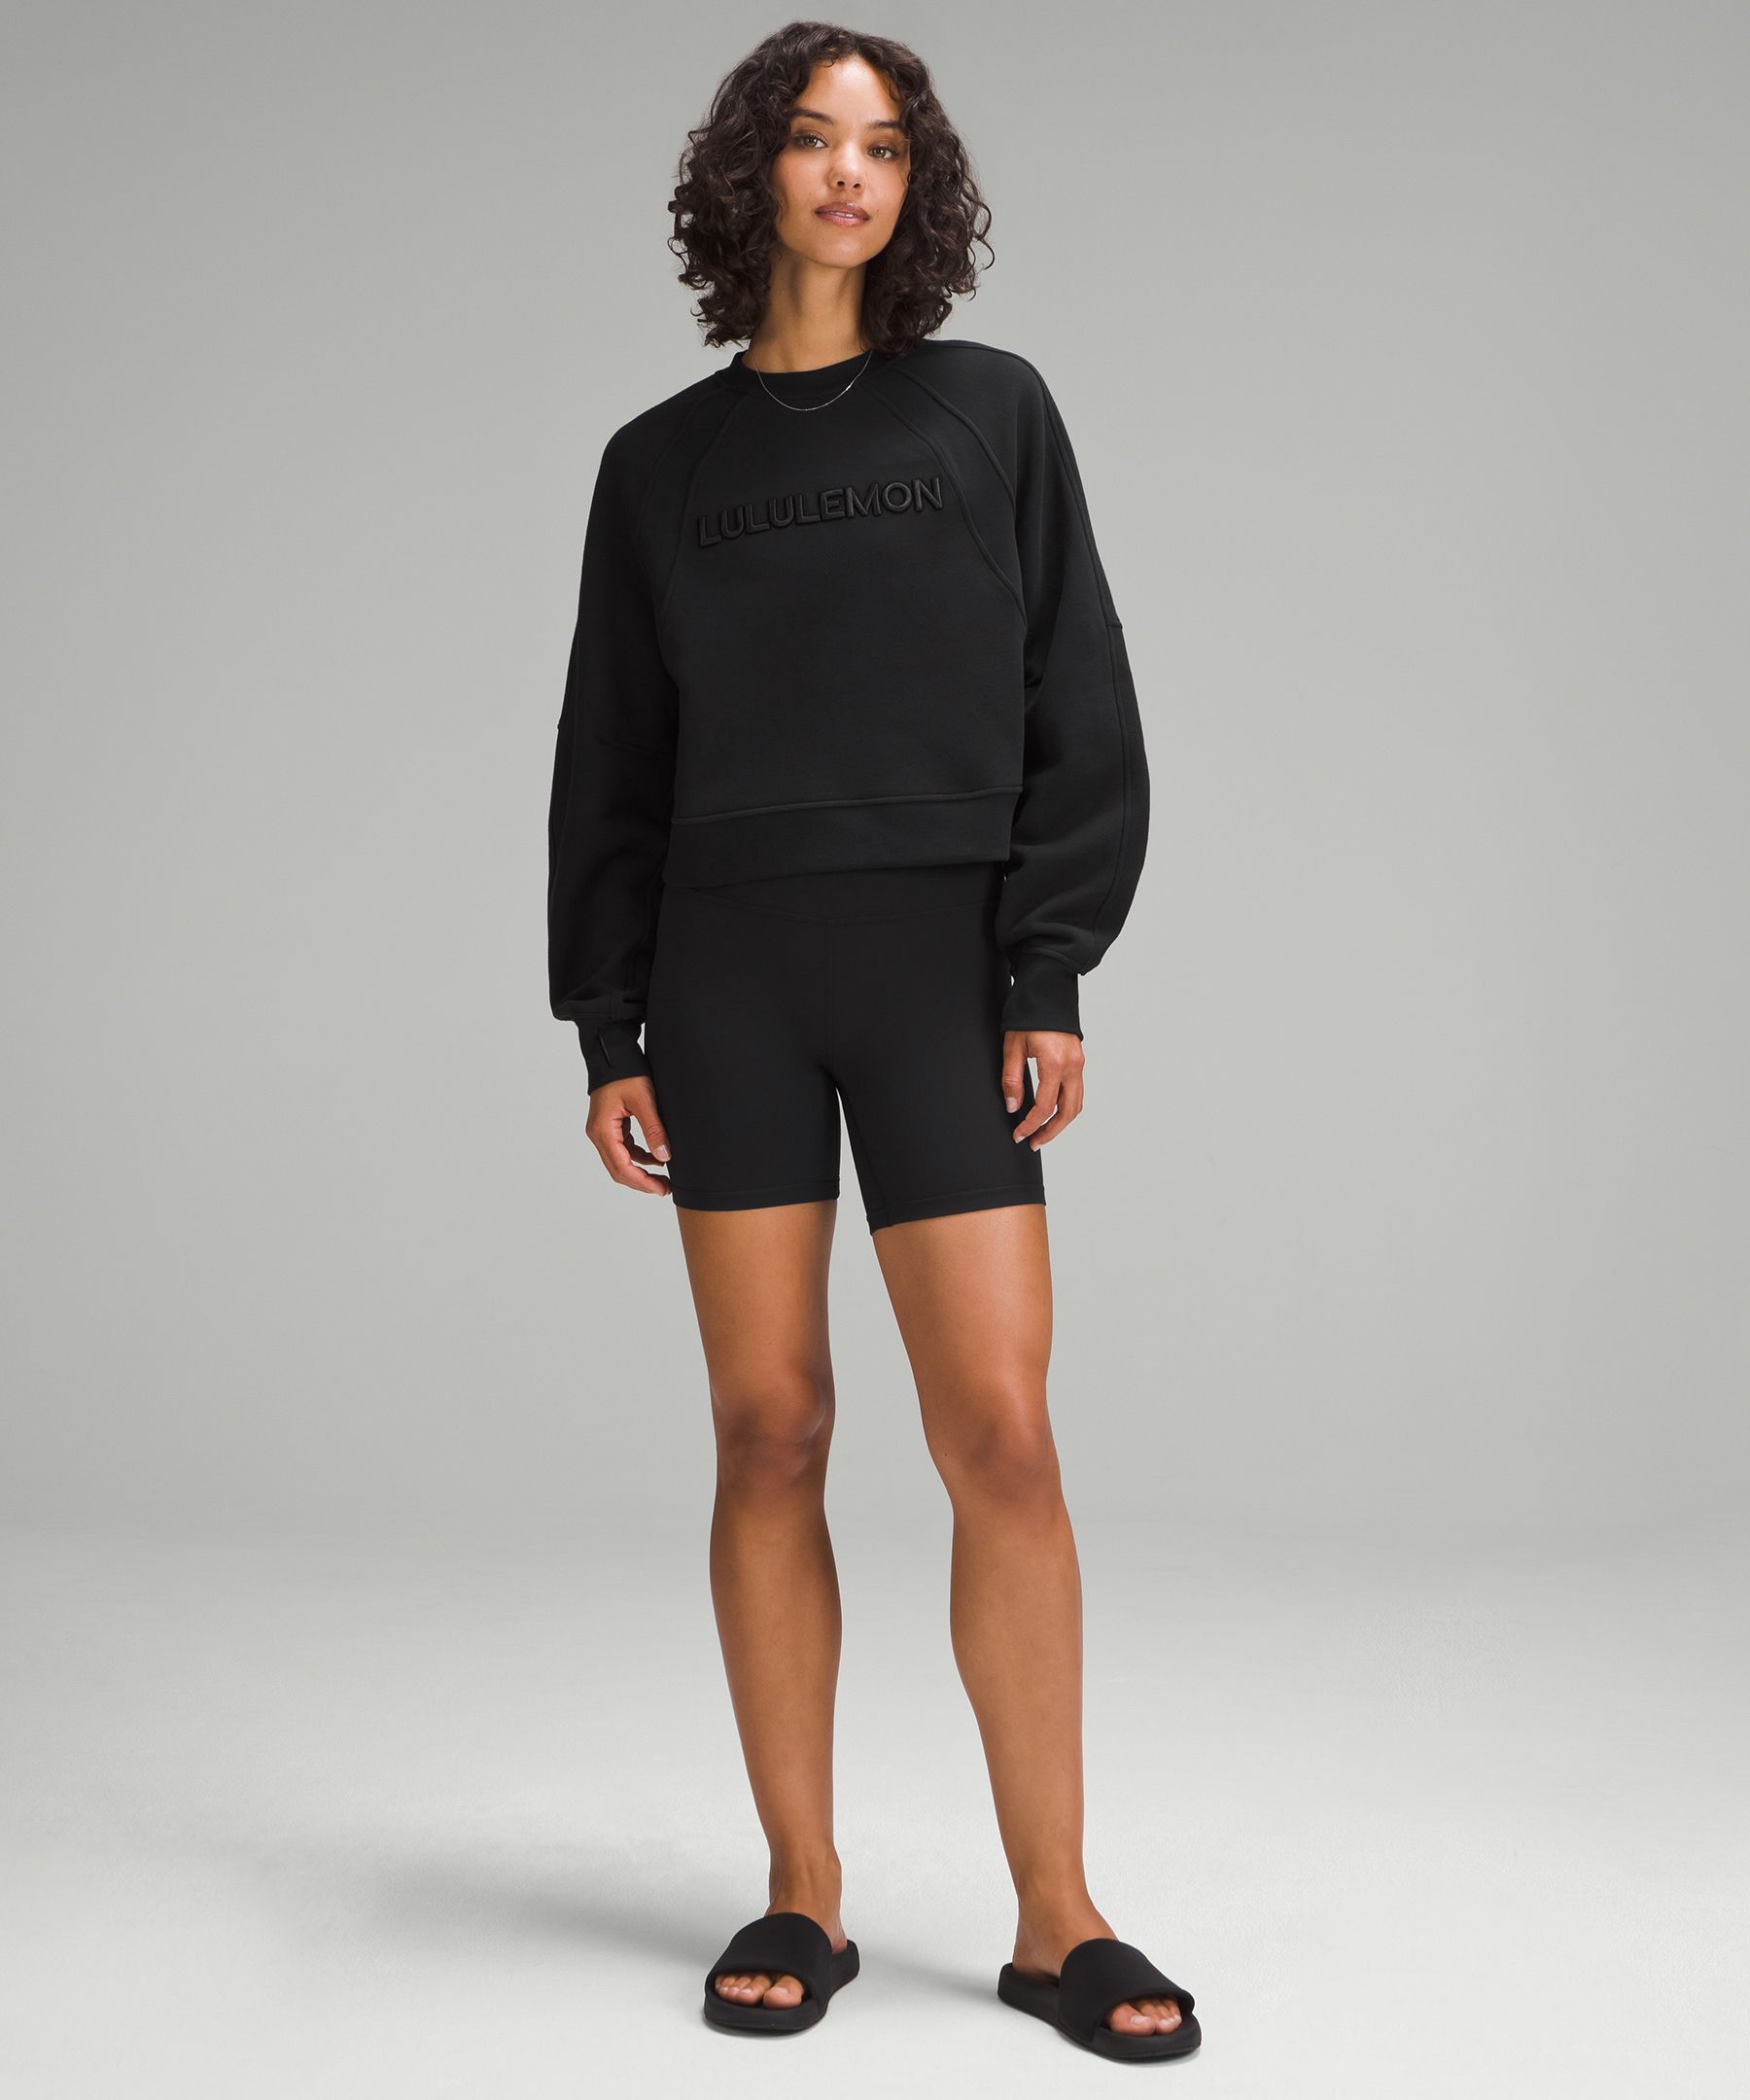 Scuba Oversized Pullover | Women's Hoodies & Sweatshirts